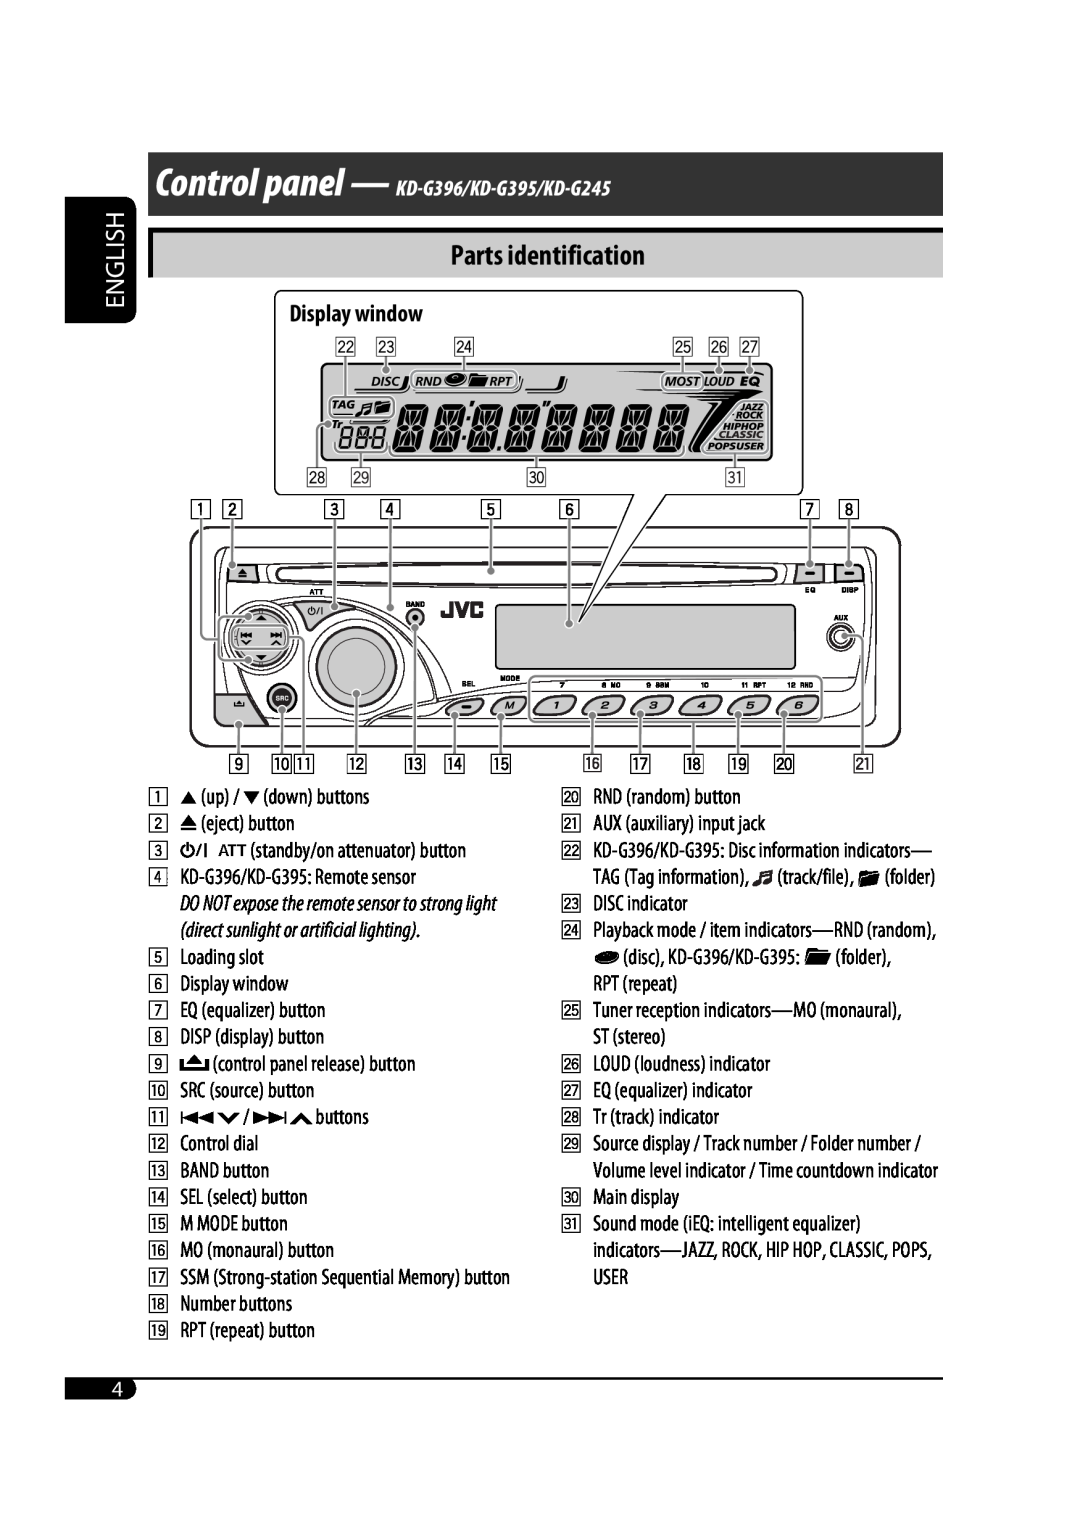 JVC MA372IEN user service Parts identification, Control panel — KD-G396/KD-G395/KD-G245, English, Display window 